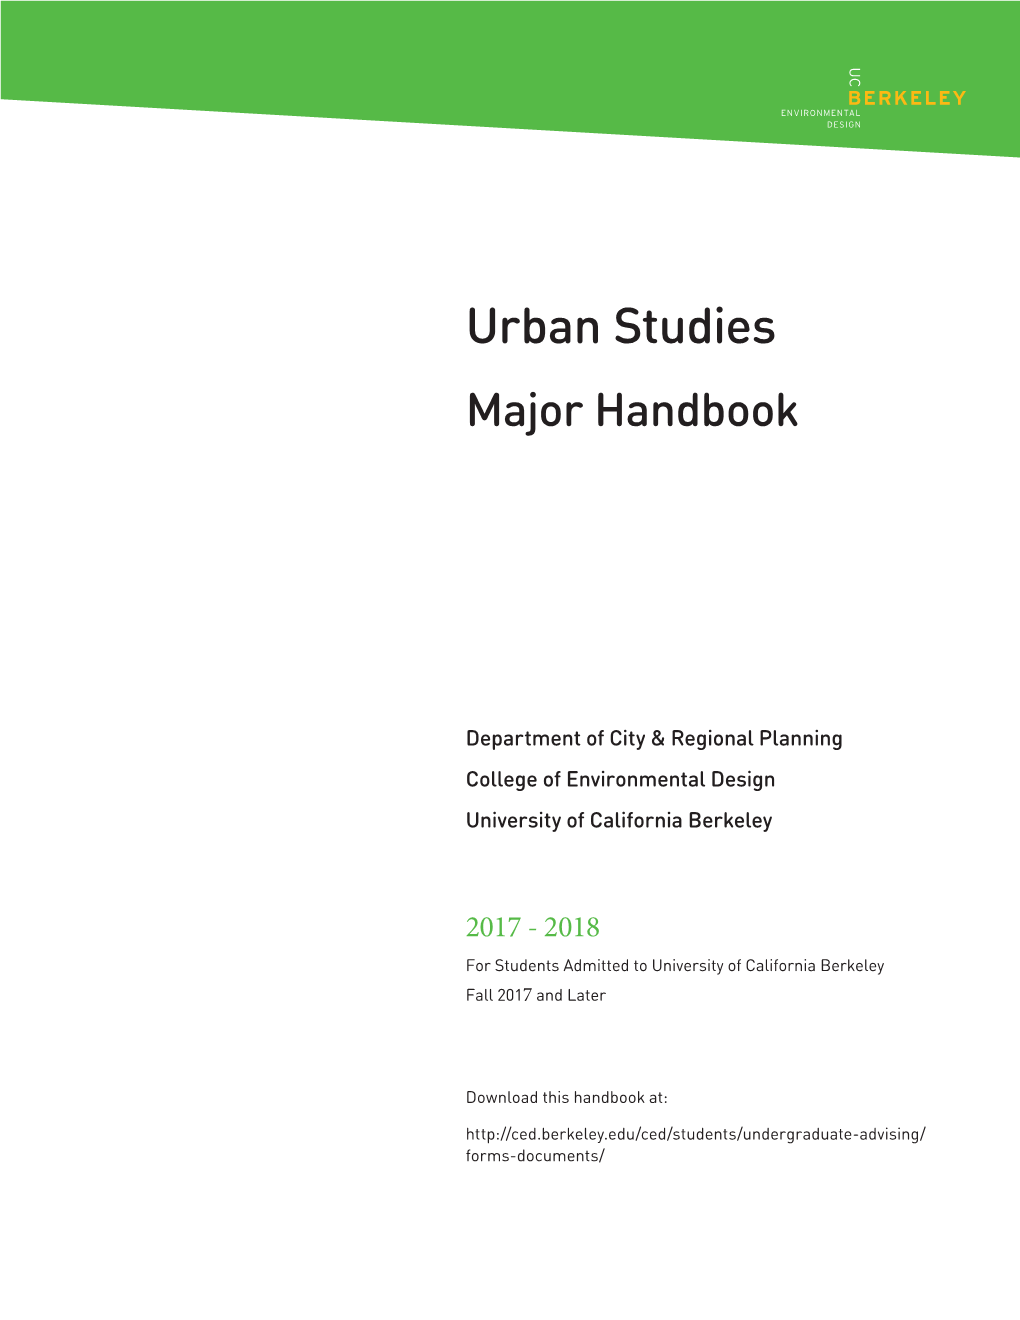 Urban Studies Major Handbook